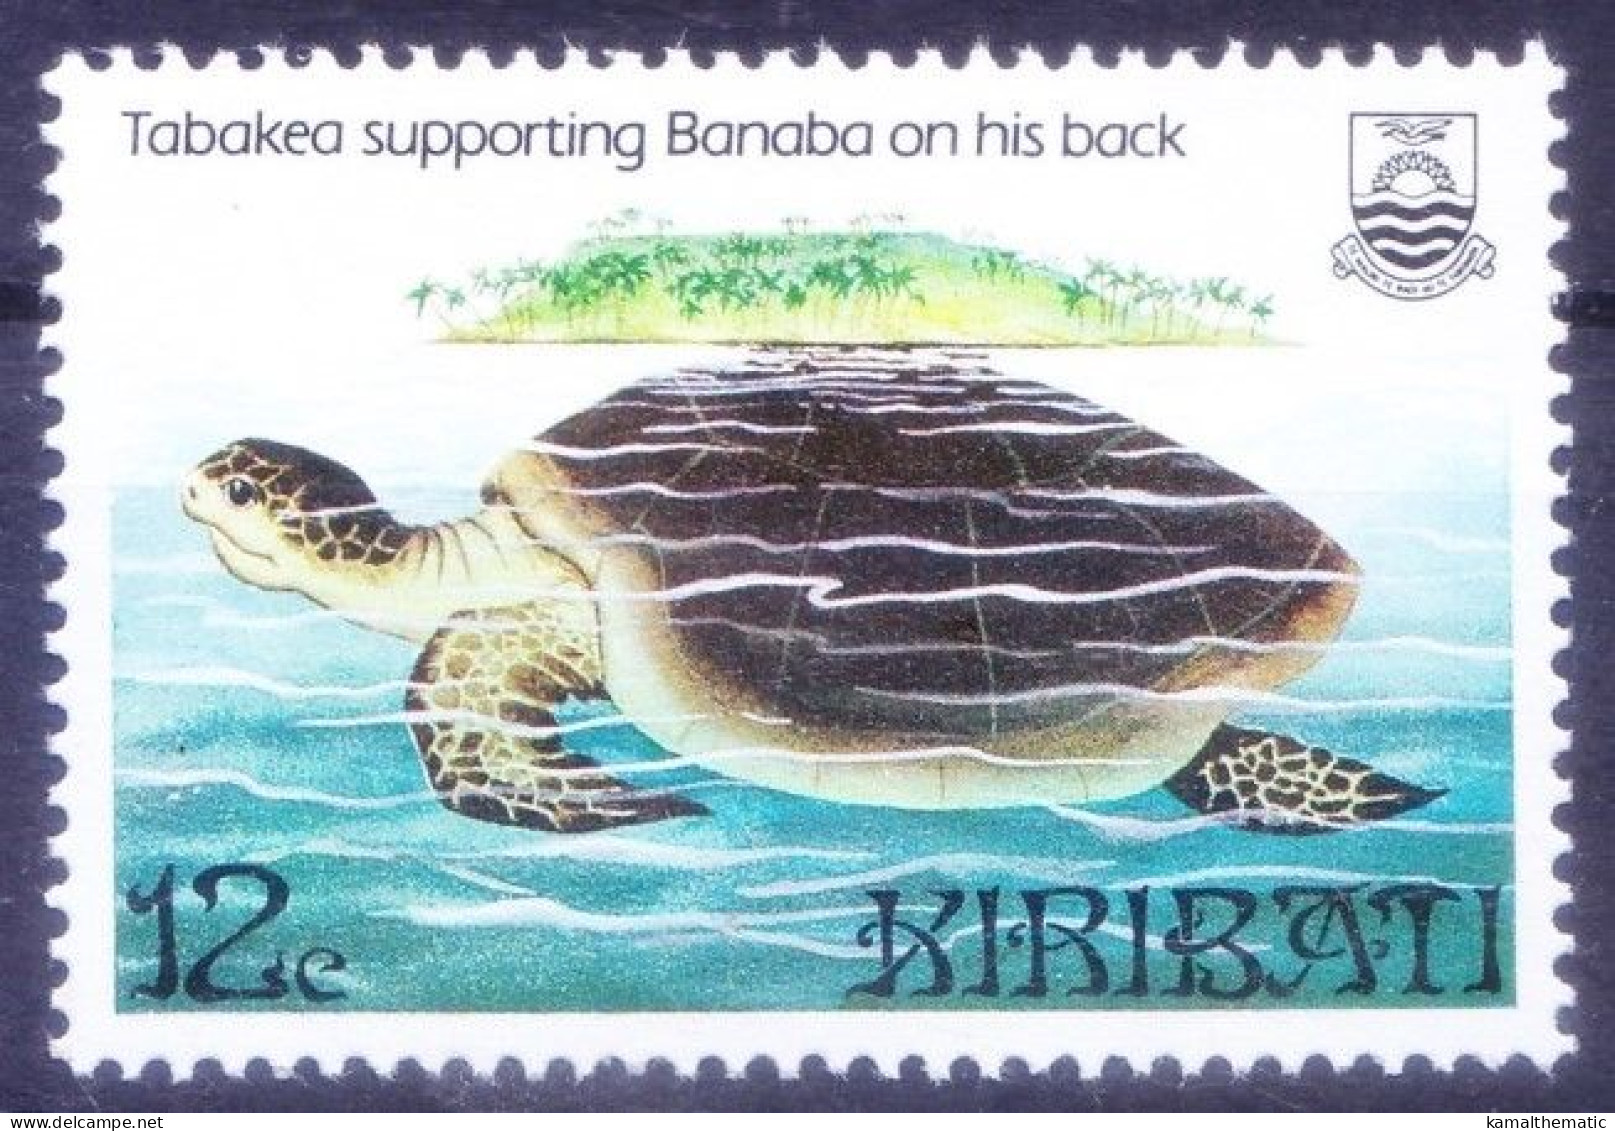 Kiribati 1984 MNH, Tabakea The Turtle God, Supporting Banaba Island On Back. - Turtles